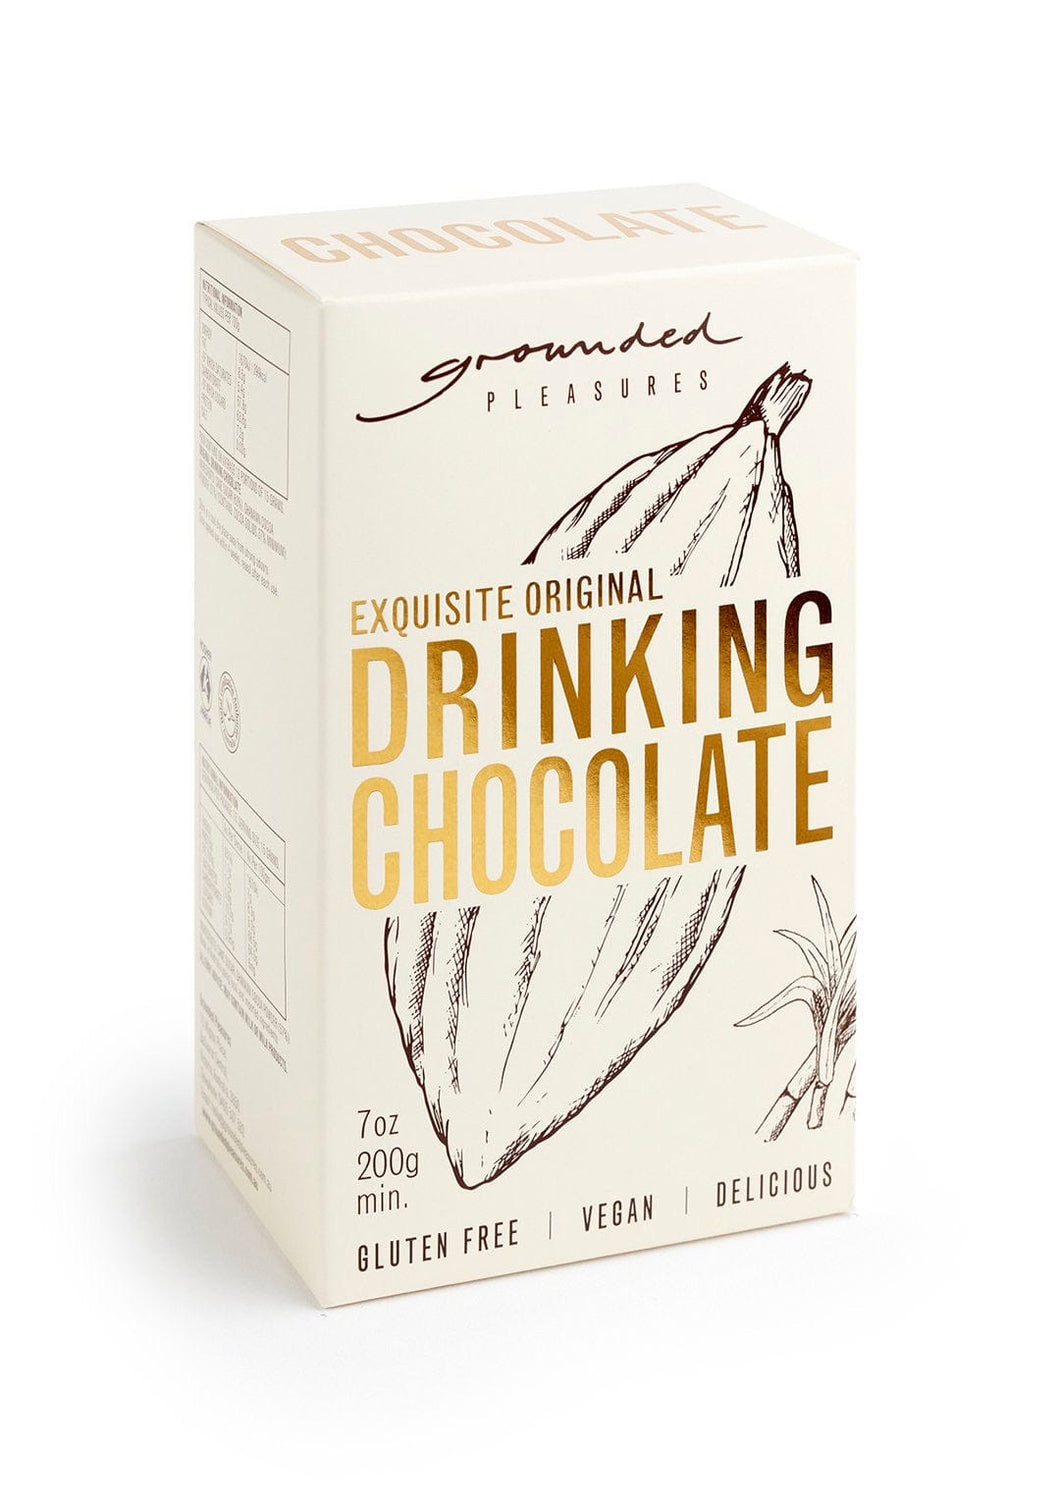 Grounded Pleasures- Exquisite Original DRINKING CHOCOLATE